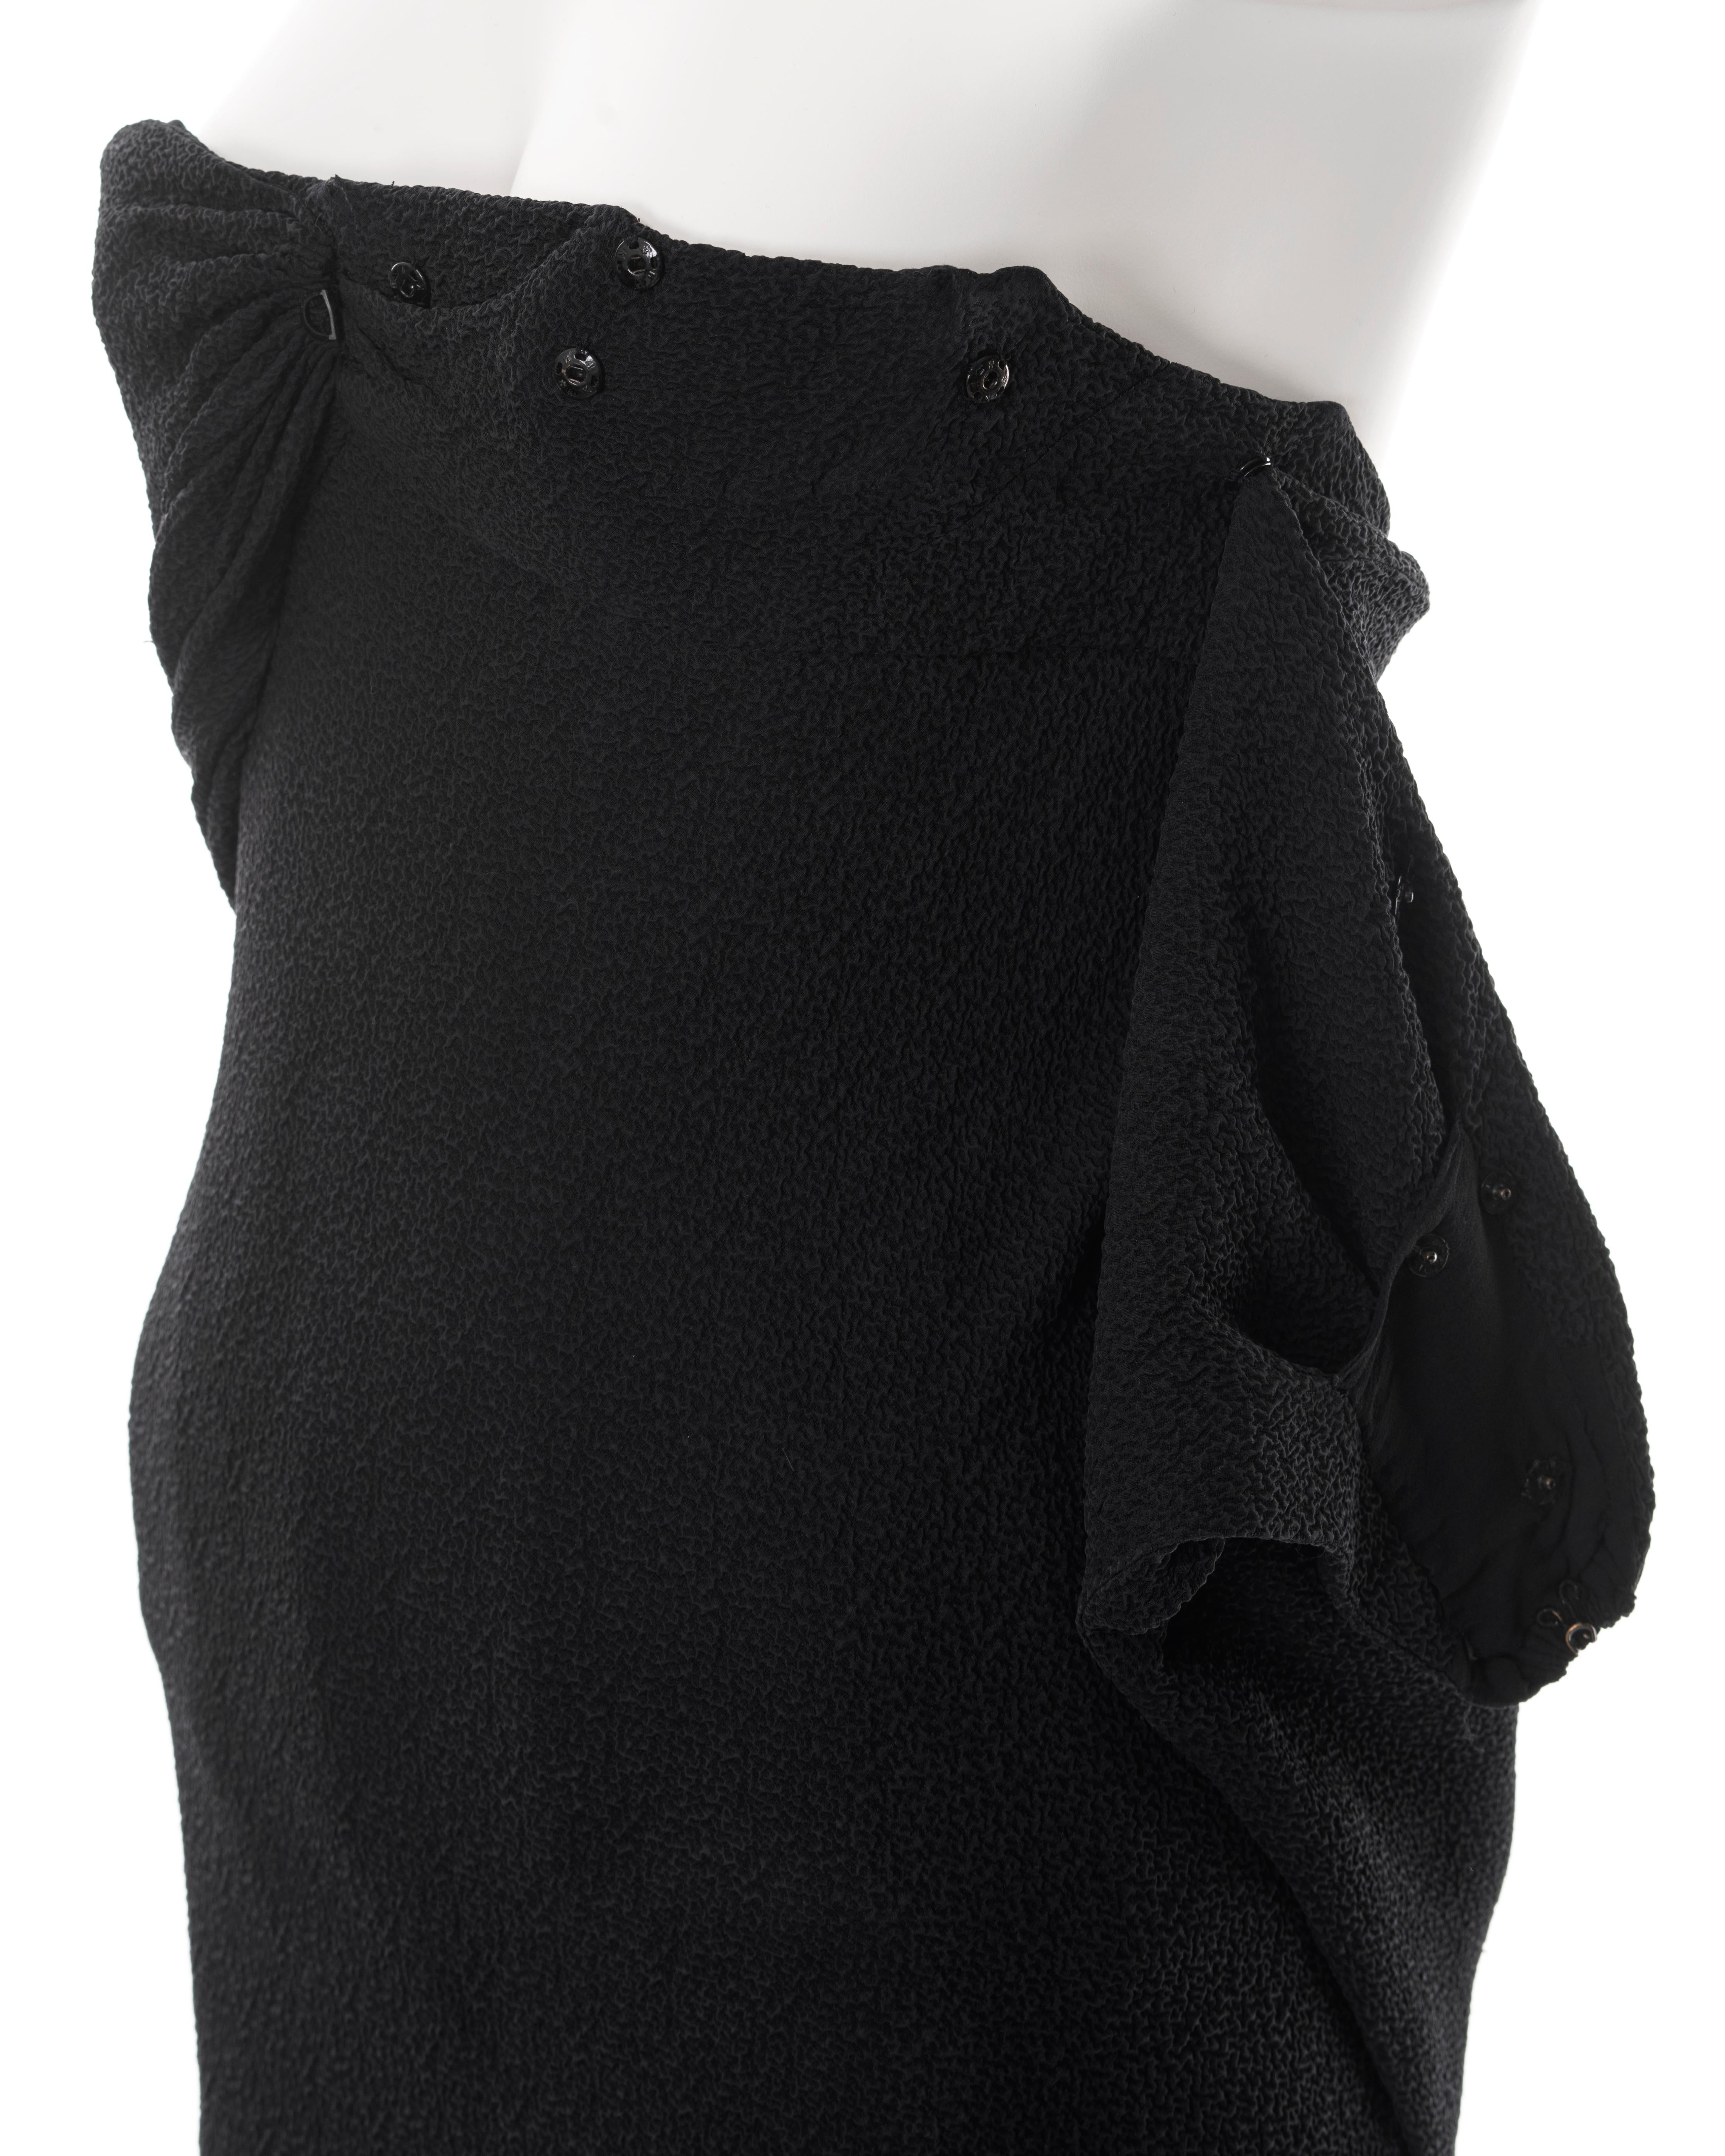 Balenciaga Haute Couture black silk crêpe evening dress with train, fw 1960 For Sale 15